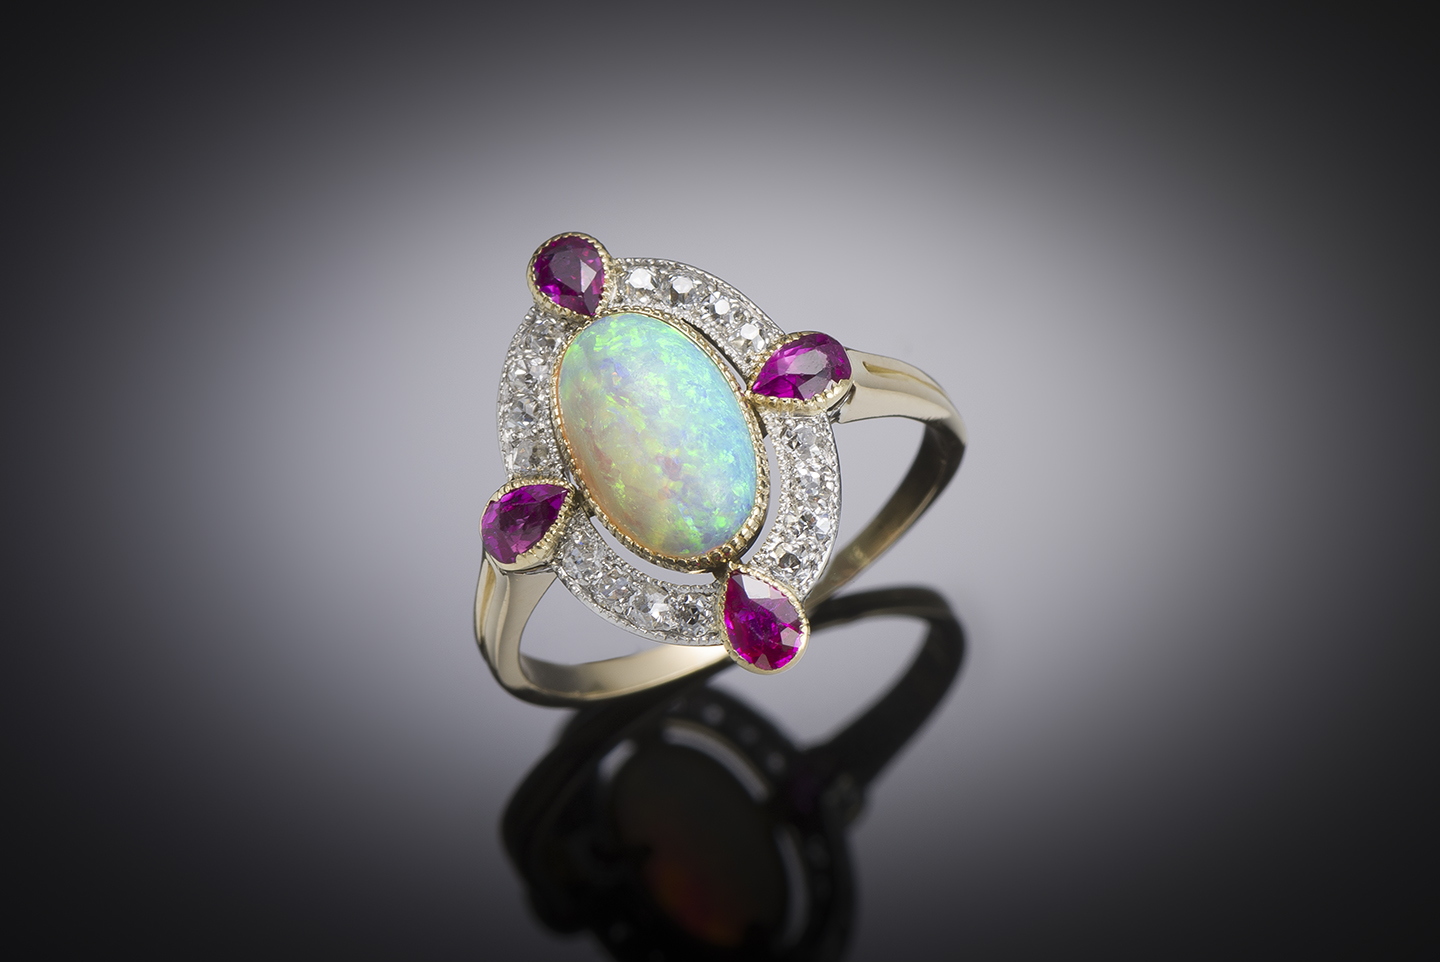 Opal, ruby and diamond ring circa 1900-1